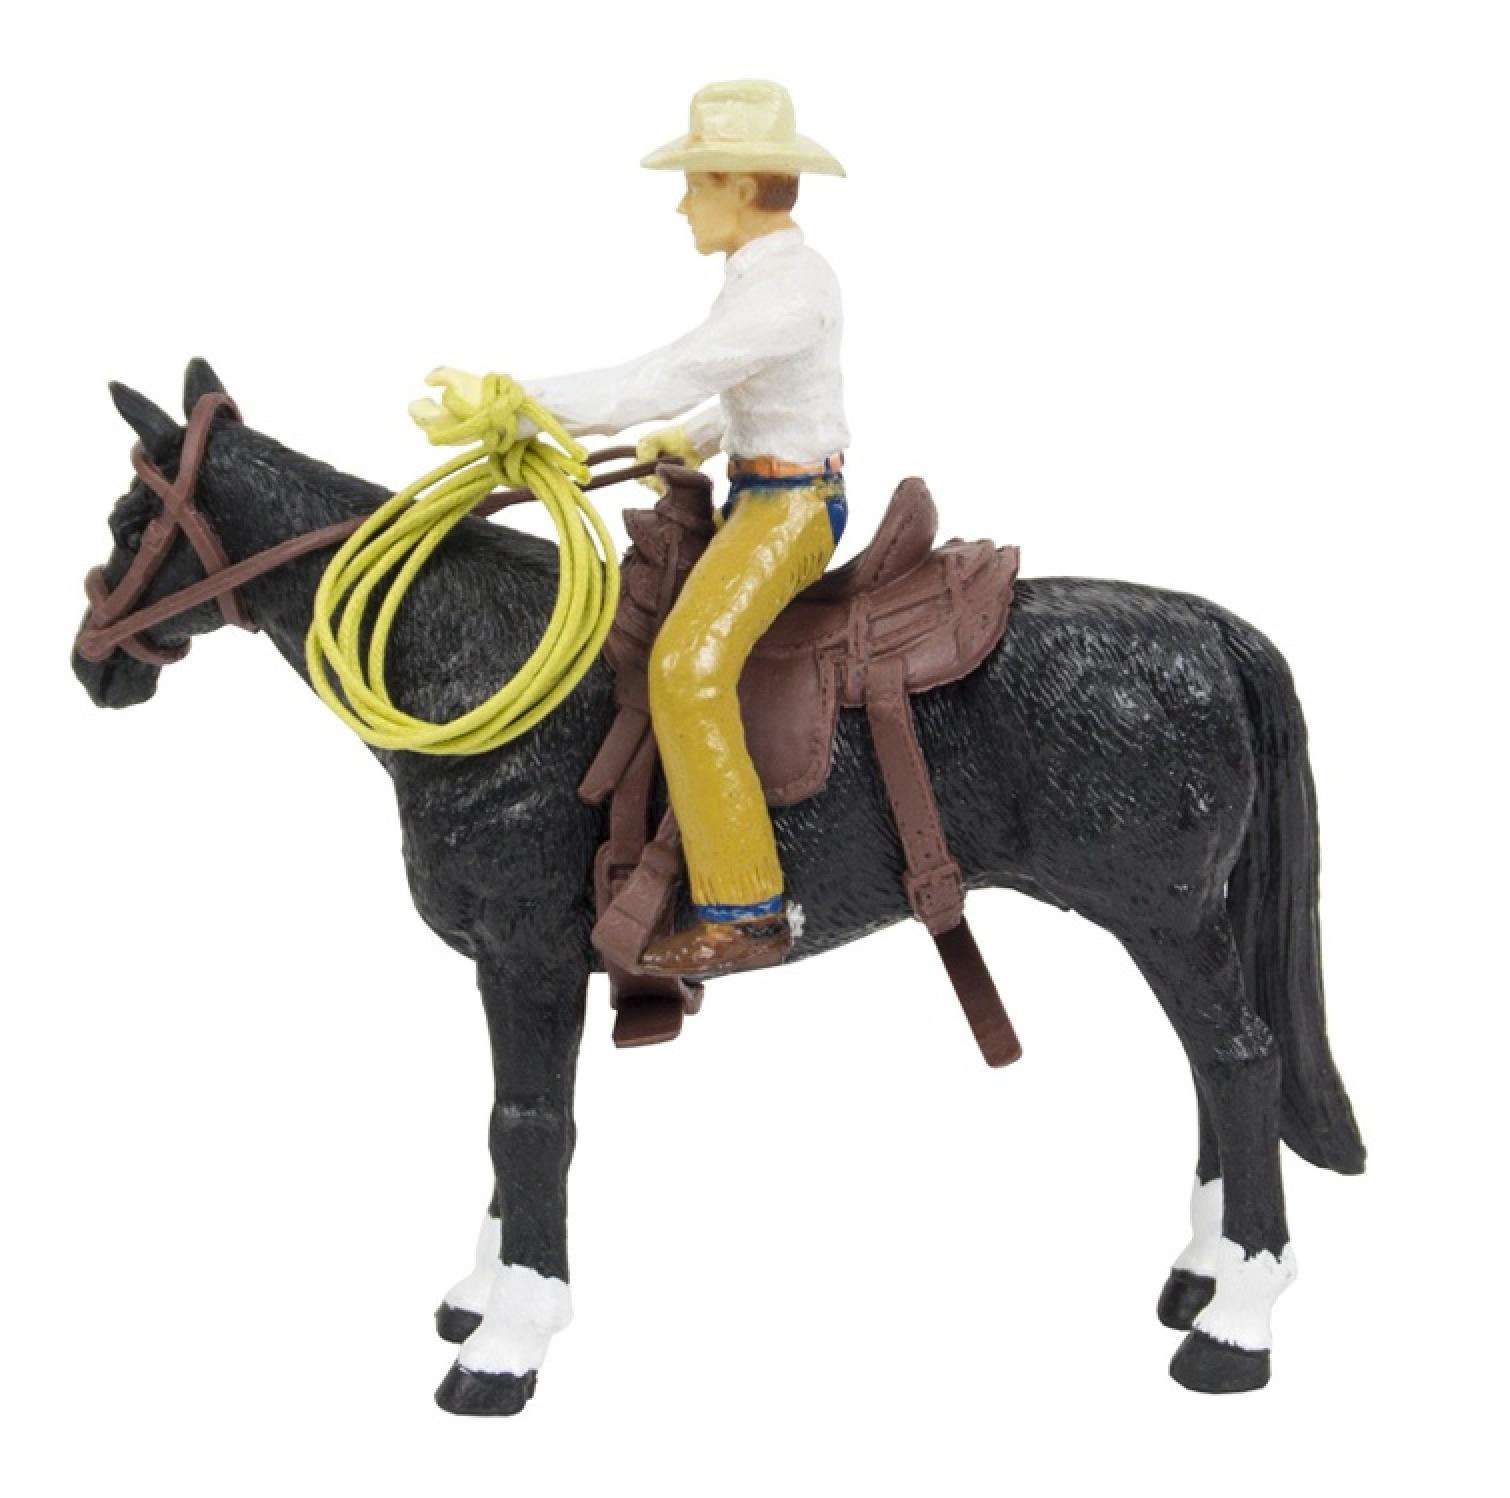 Big Country Farm Toys Cowboy on Horse